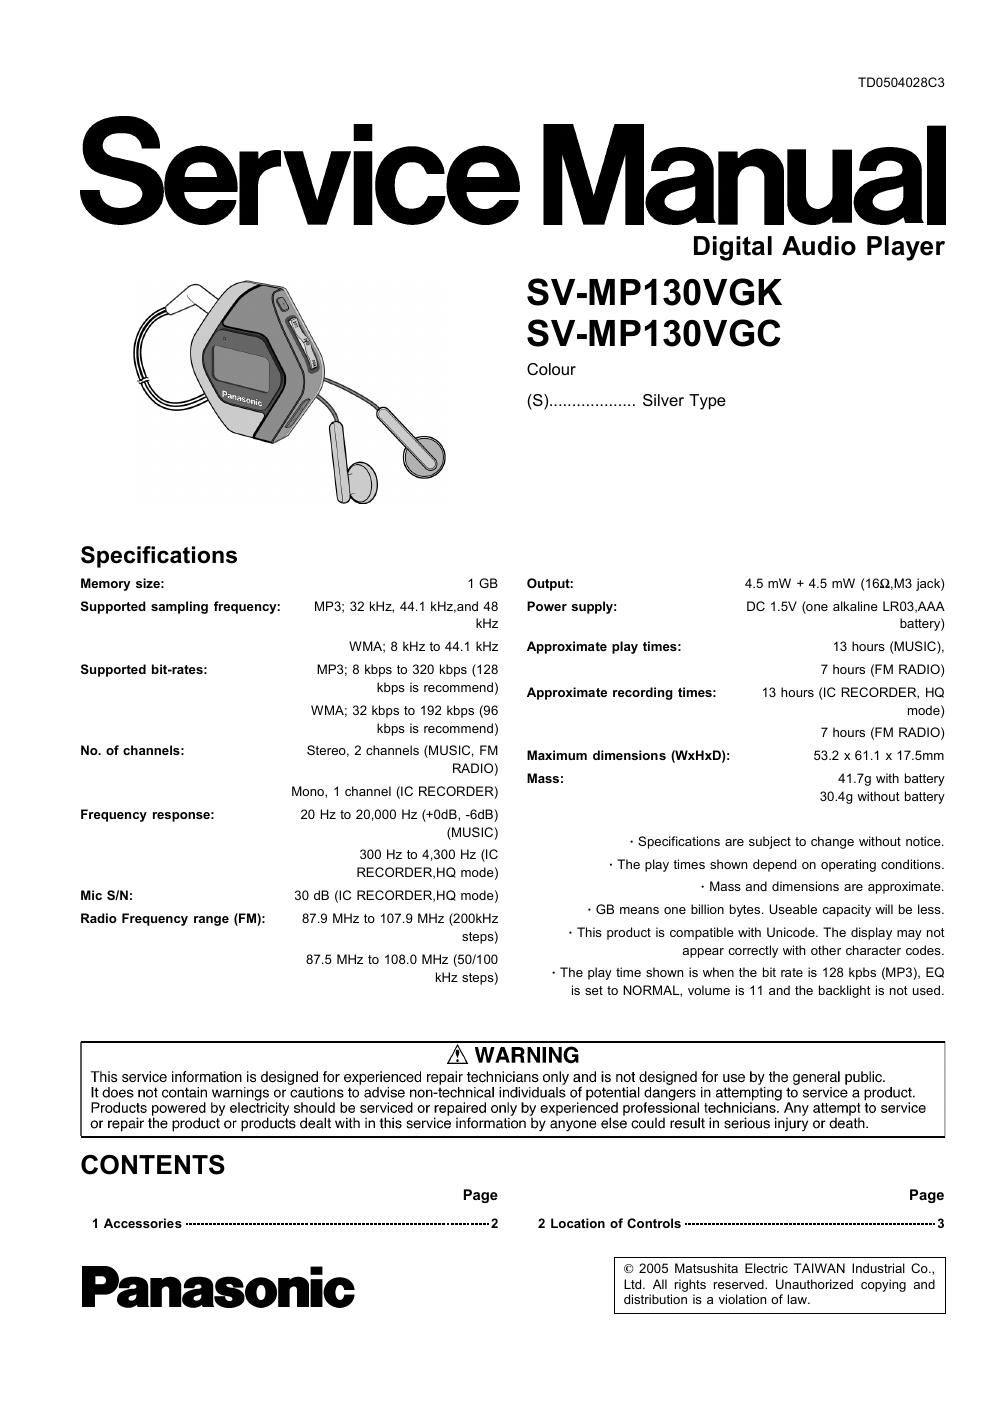 panasonic sv mp 130 vgk service manual